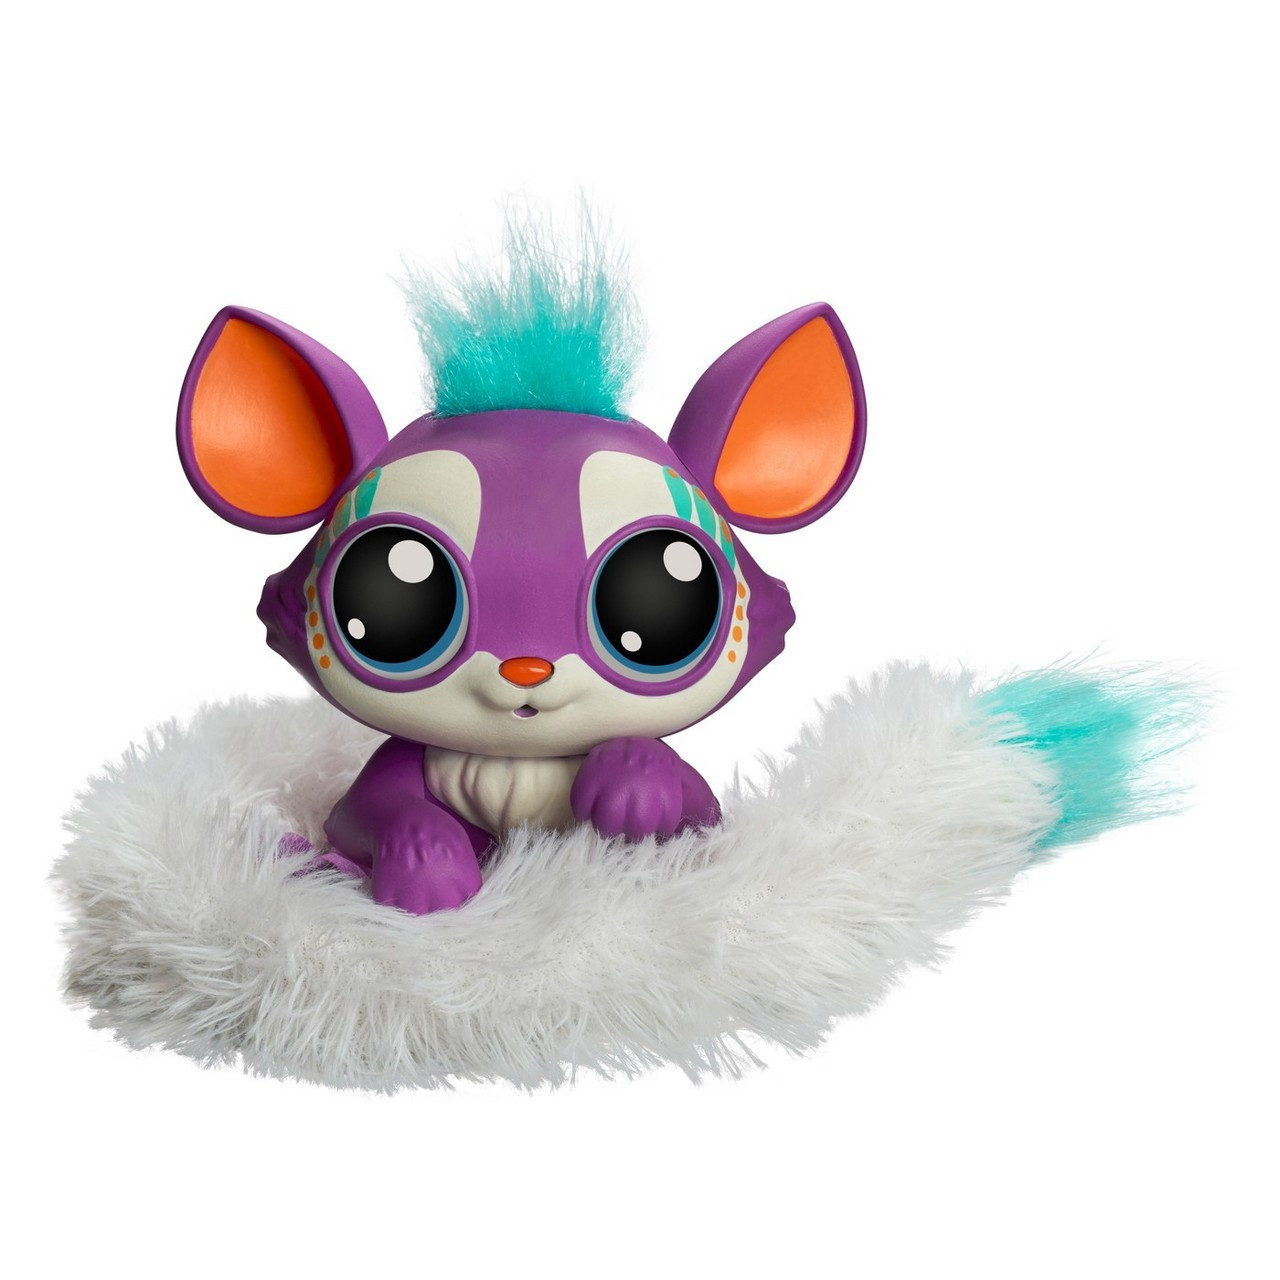 Lil Gleemerz Loomur Interactive Toy Mattel Toywiz - pinchy plushie pre order plushies roblox plush monster dolls